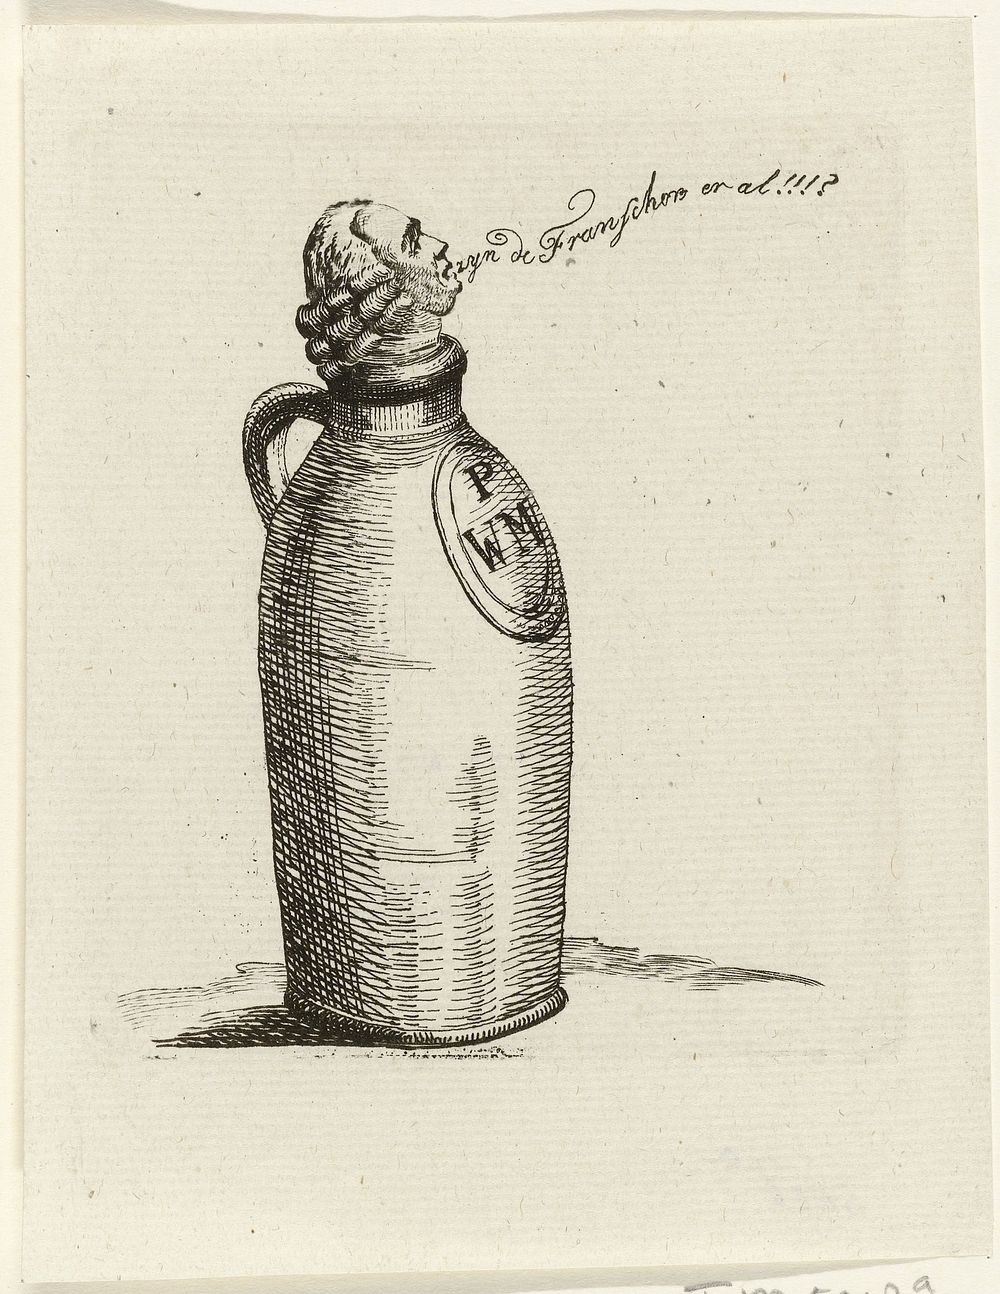 Spotprent op Pieter Witmond, 1787 (1787) by anonymous